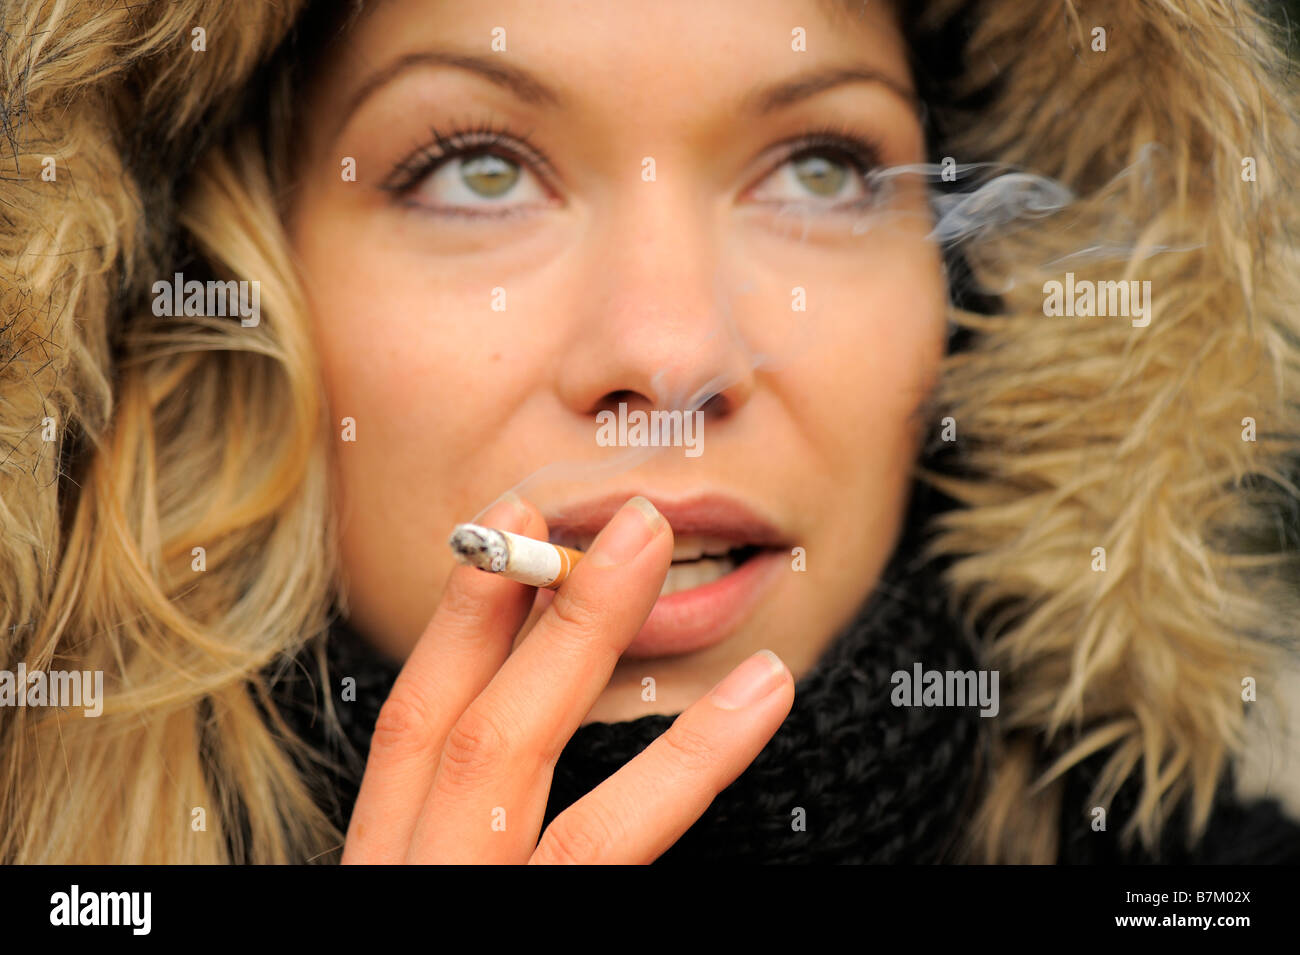 young woman smoking Stock Photo